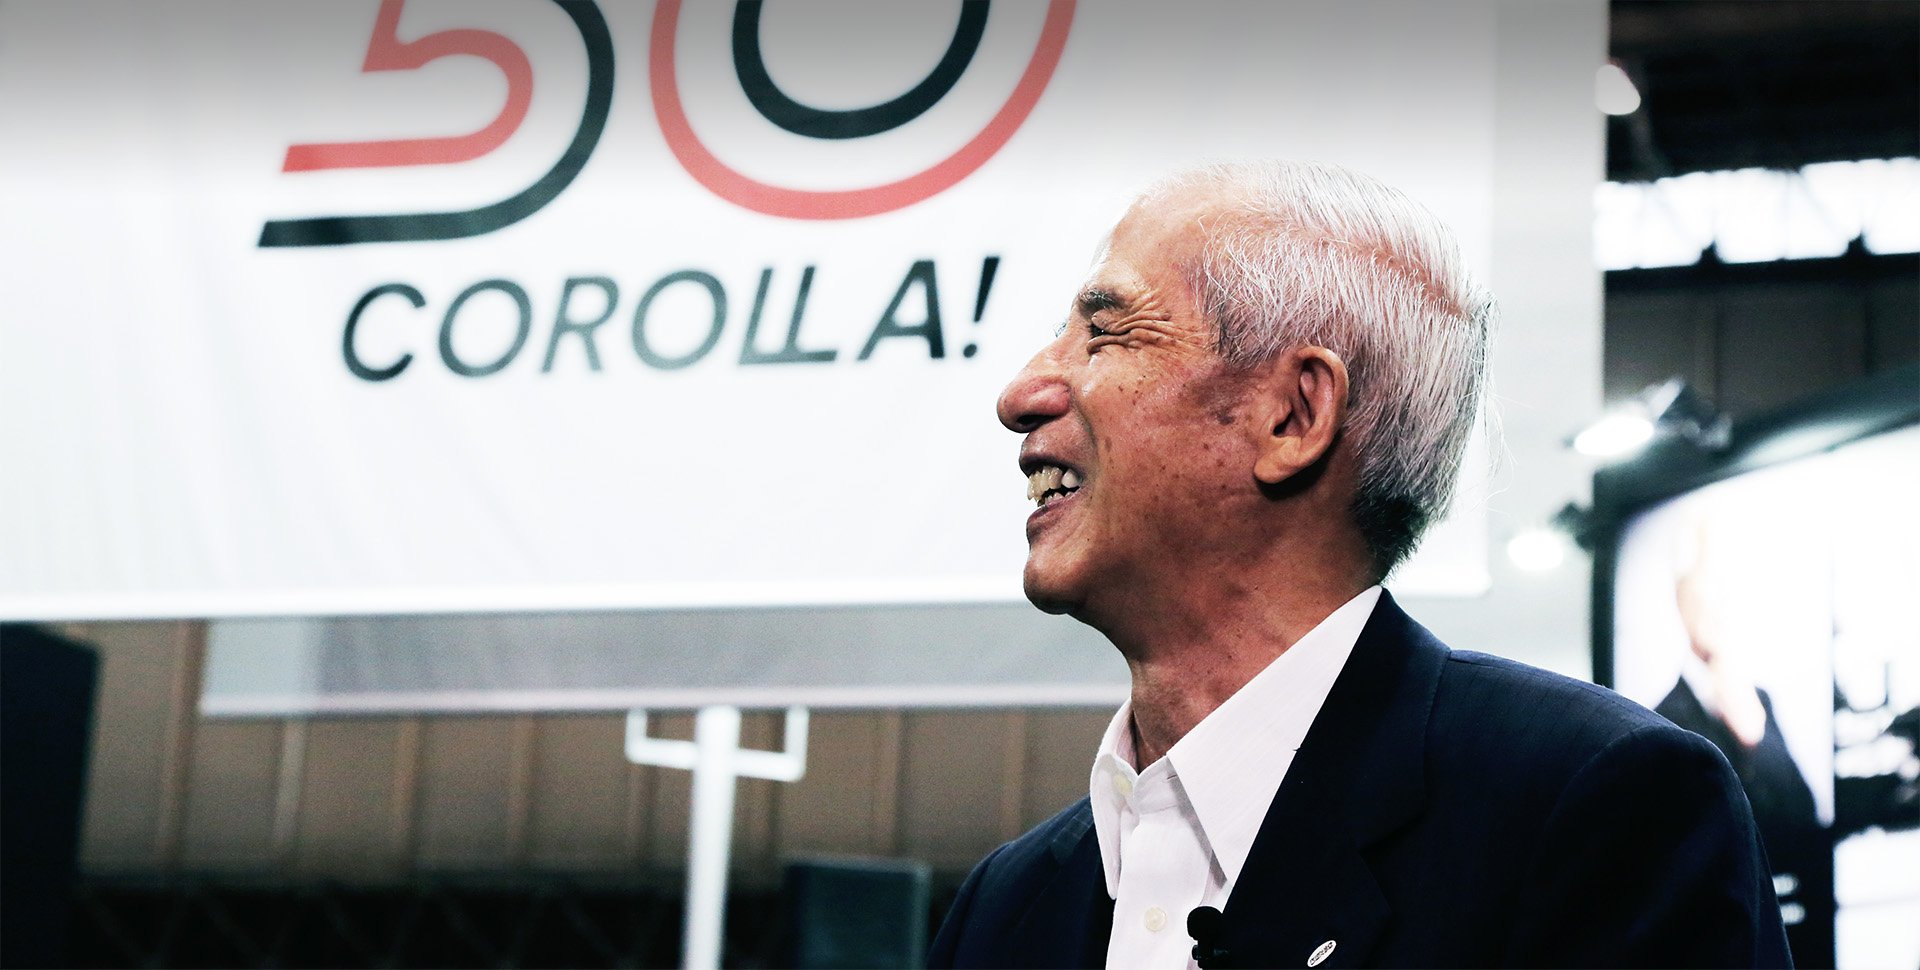 Akihiko Saito, Chief Engineer for the 6th and 7th generation Corolla